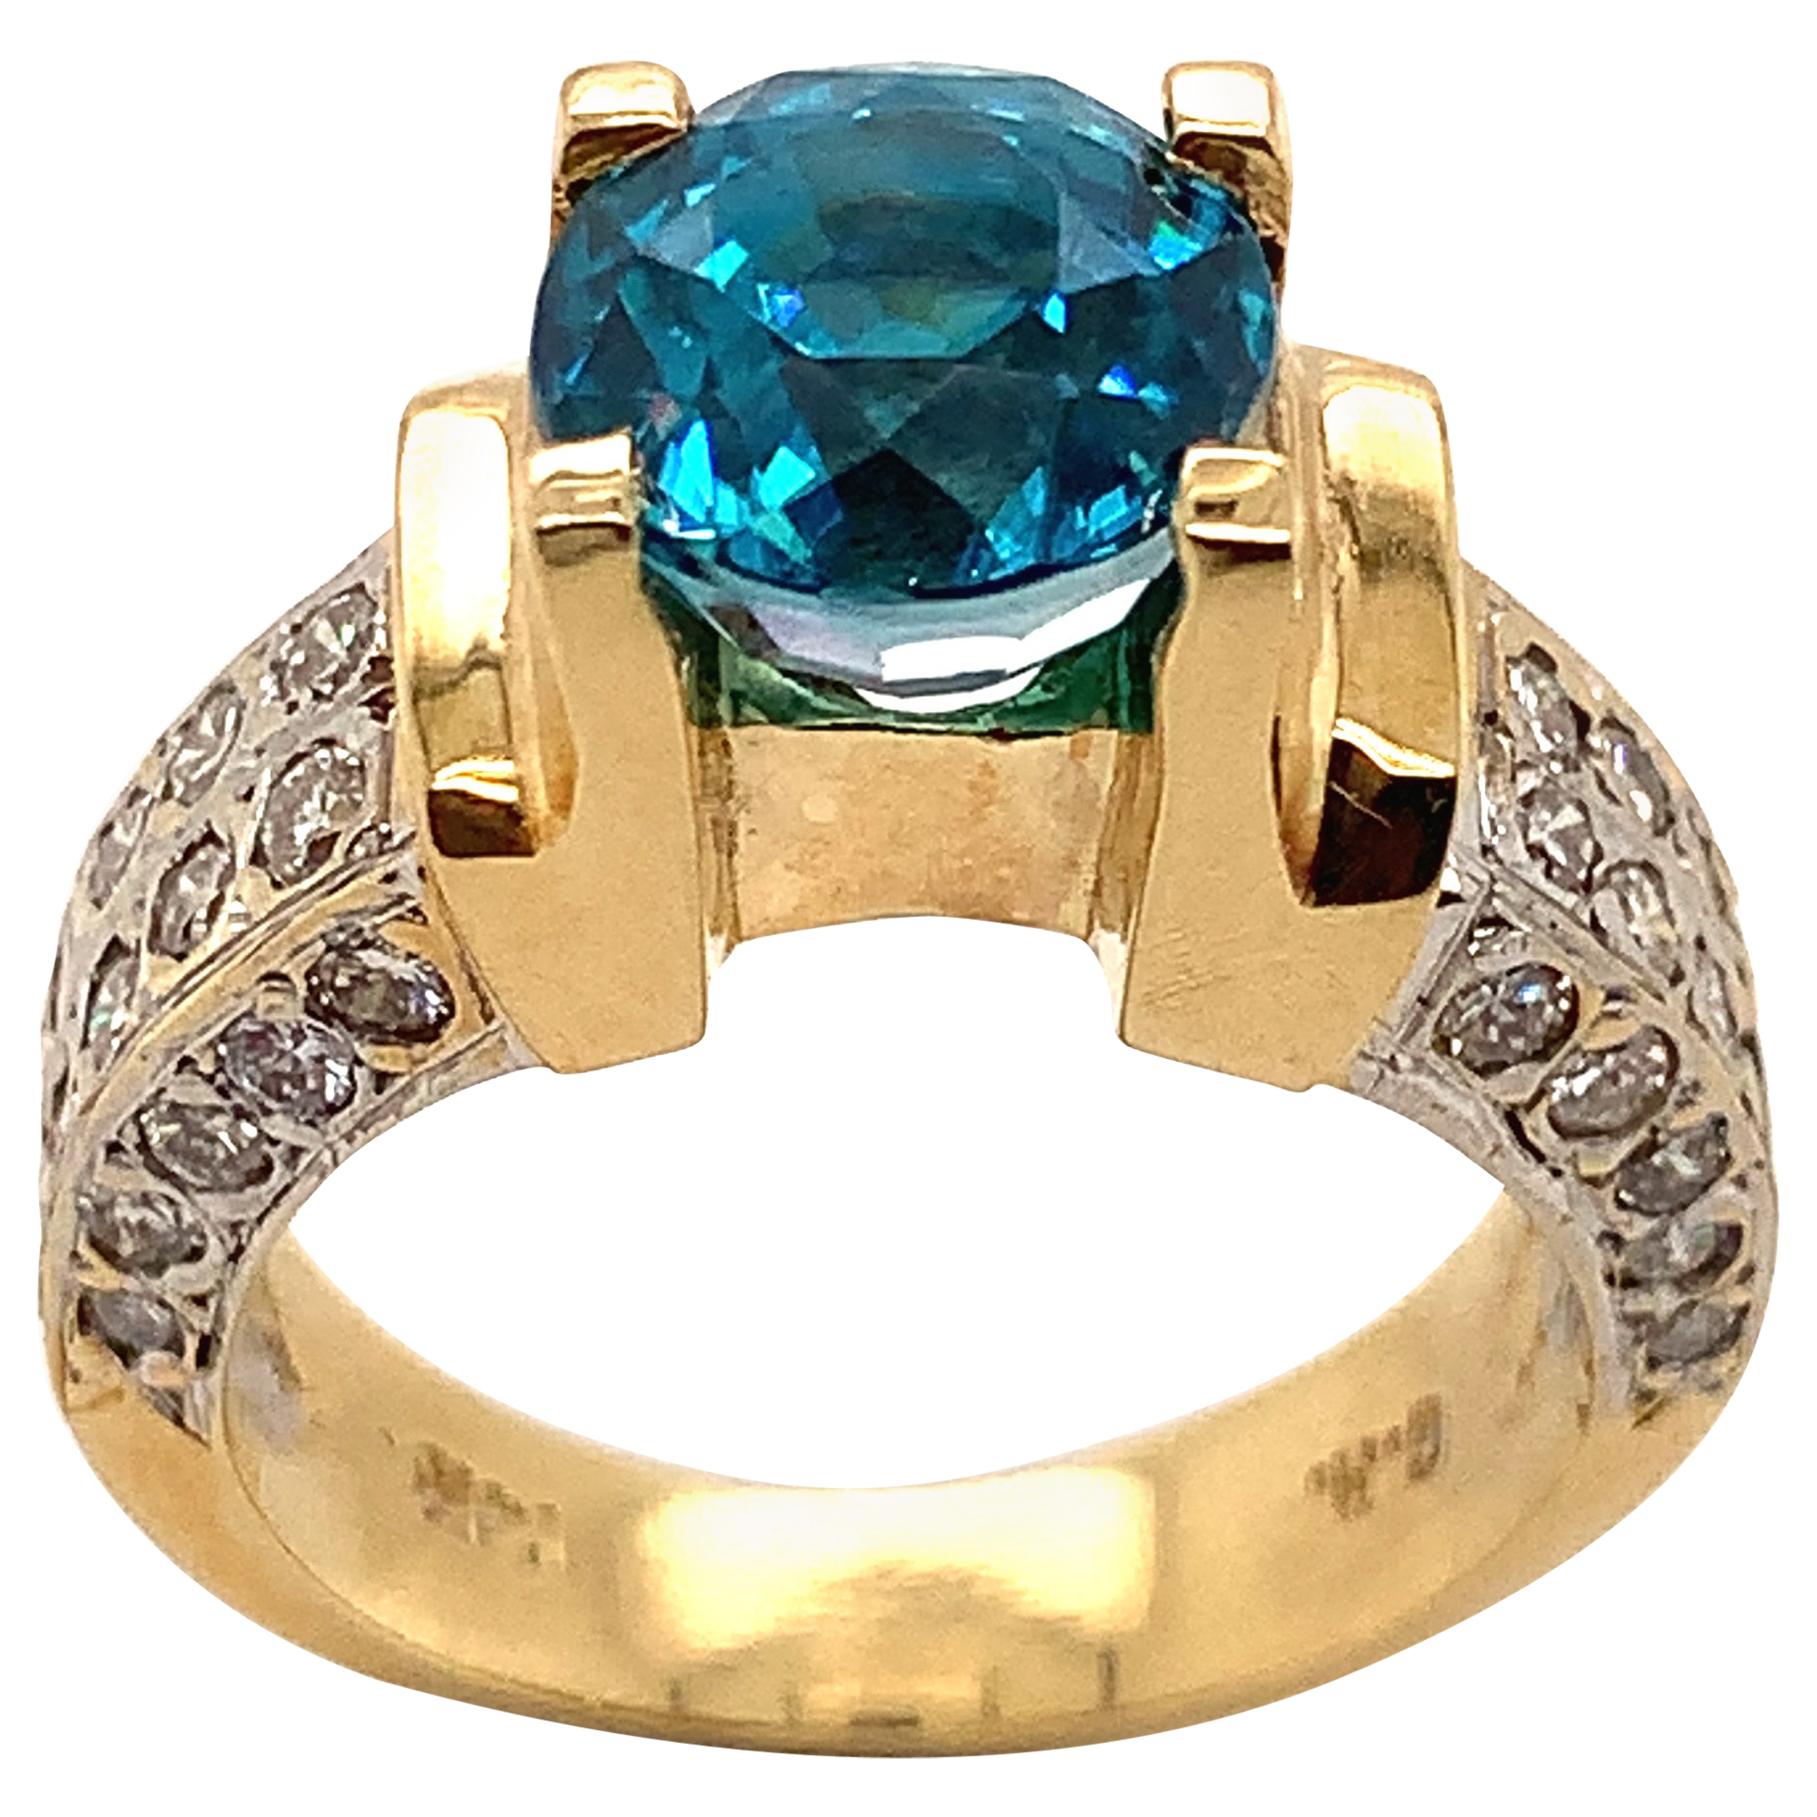 4.71 Carat Blue Zircon with Diamond Ring in 14 Karat Gold